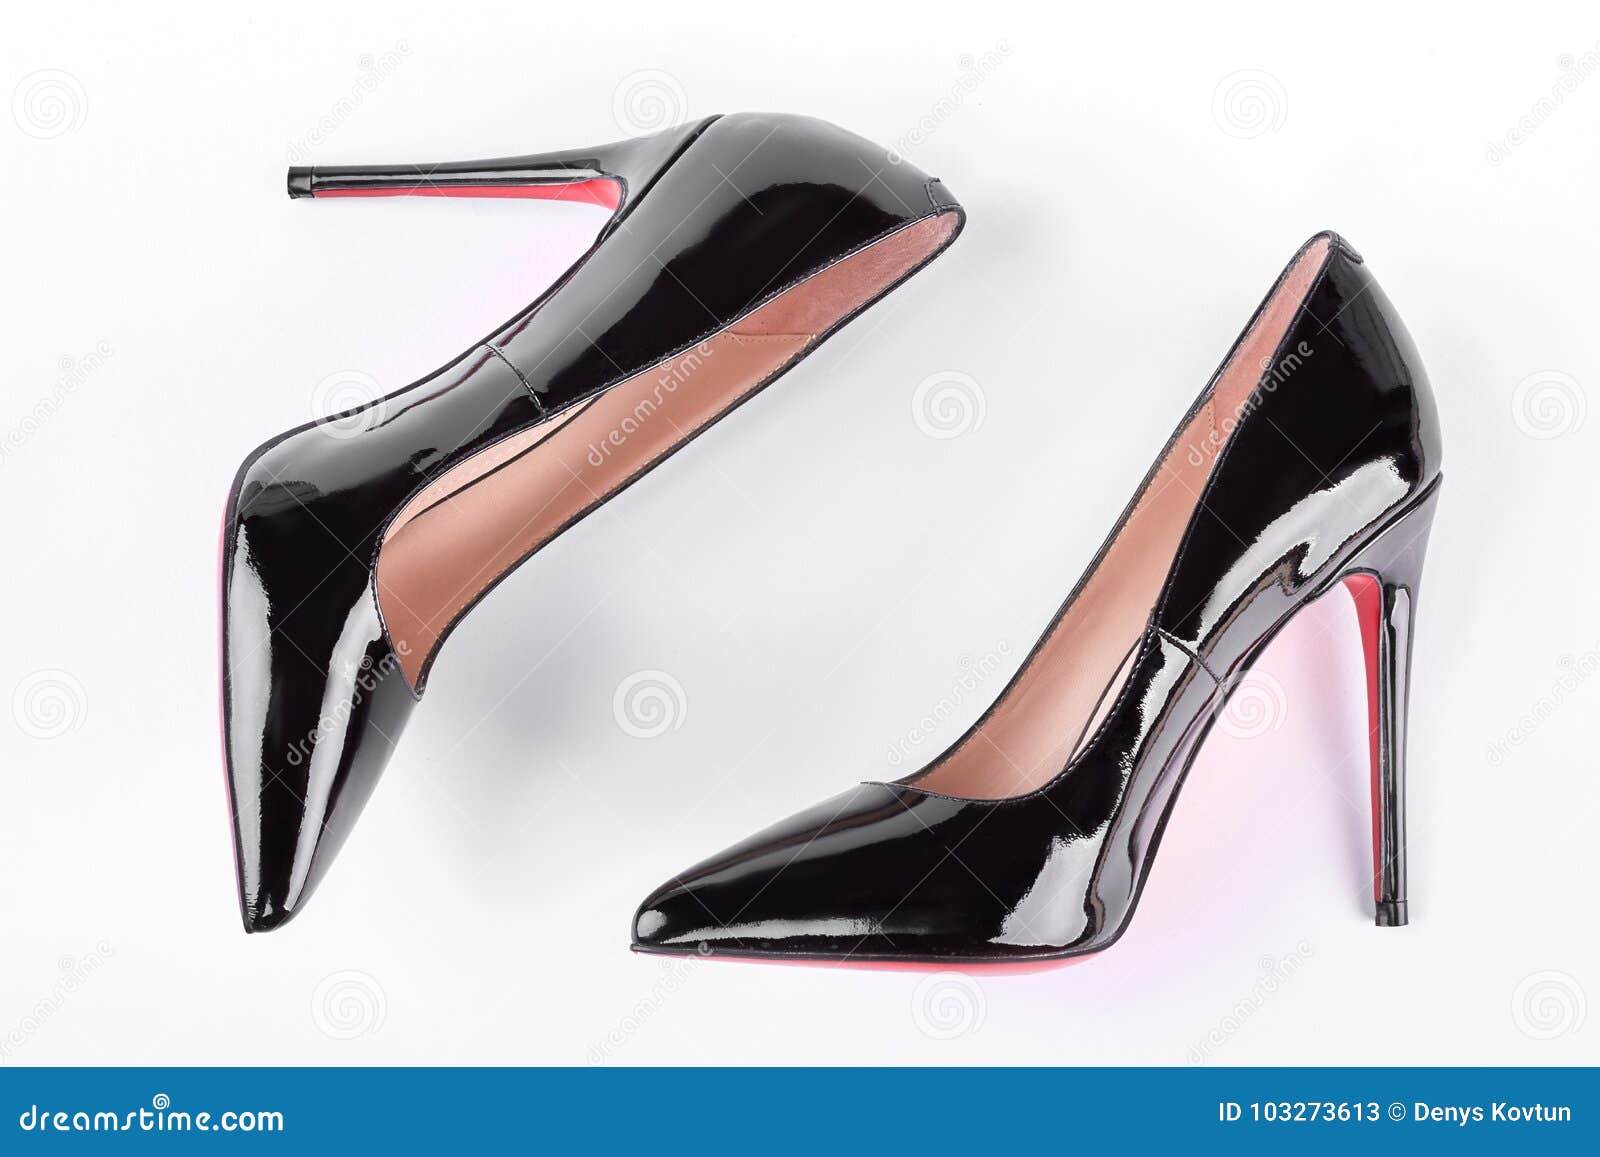 Pares Zapatos De Tacón Alto Elegantes Negros de archivo - Imagen de zapato, aislado: 103273613